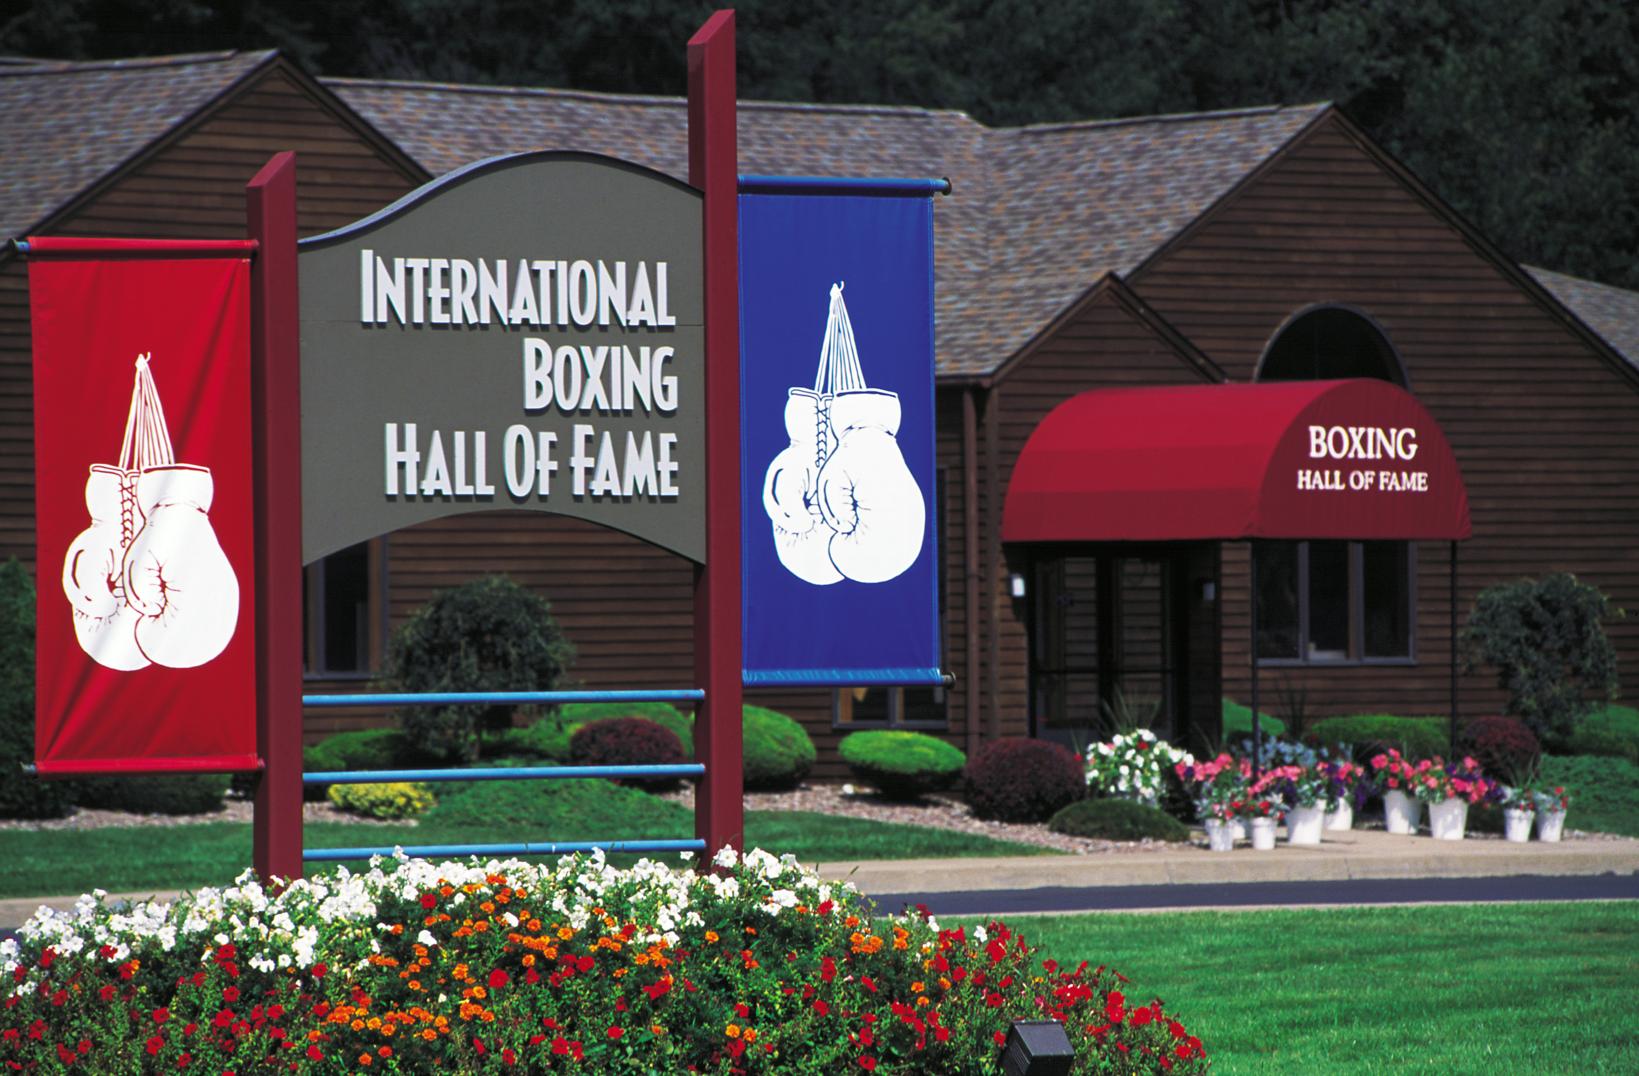 Boxing hall. Boxing Hall of Fame. International Hall of Fame. International Boxing. Международный боксерский зал славы экспонаты.